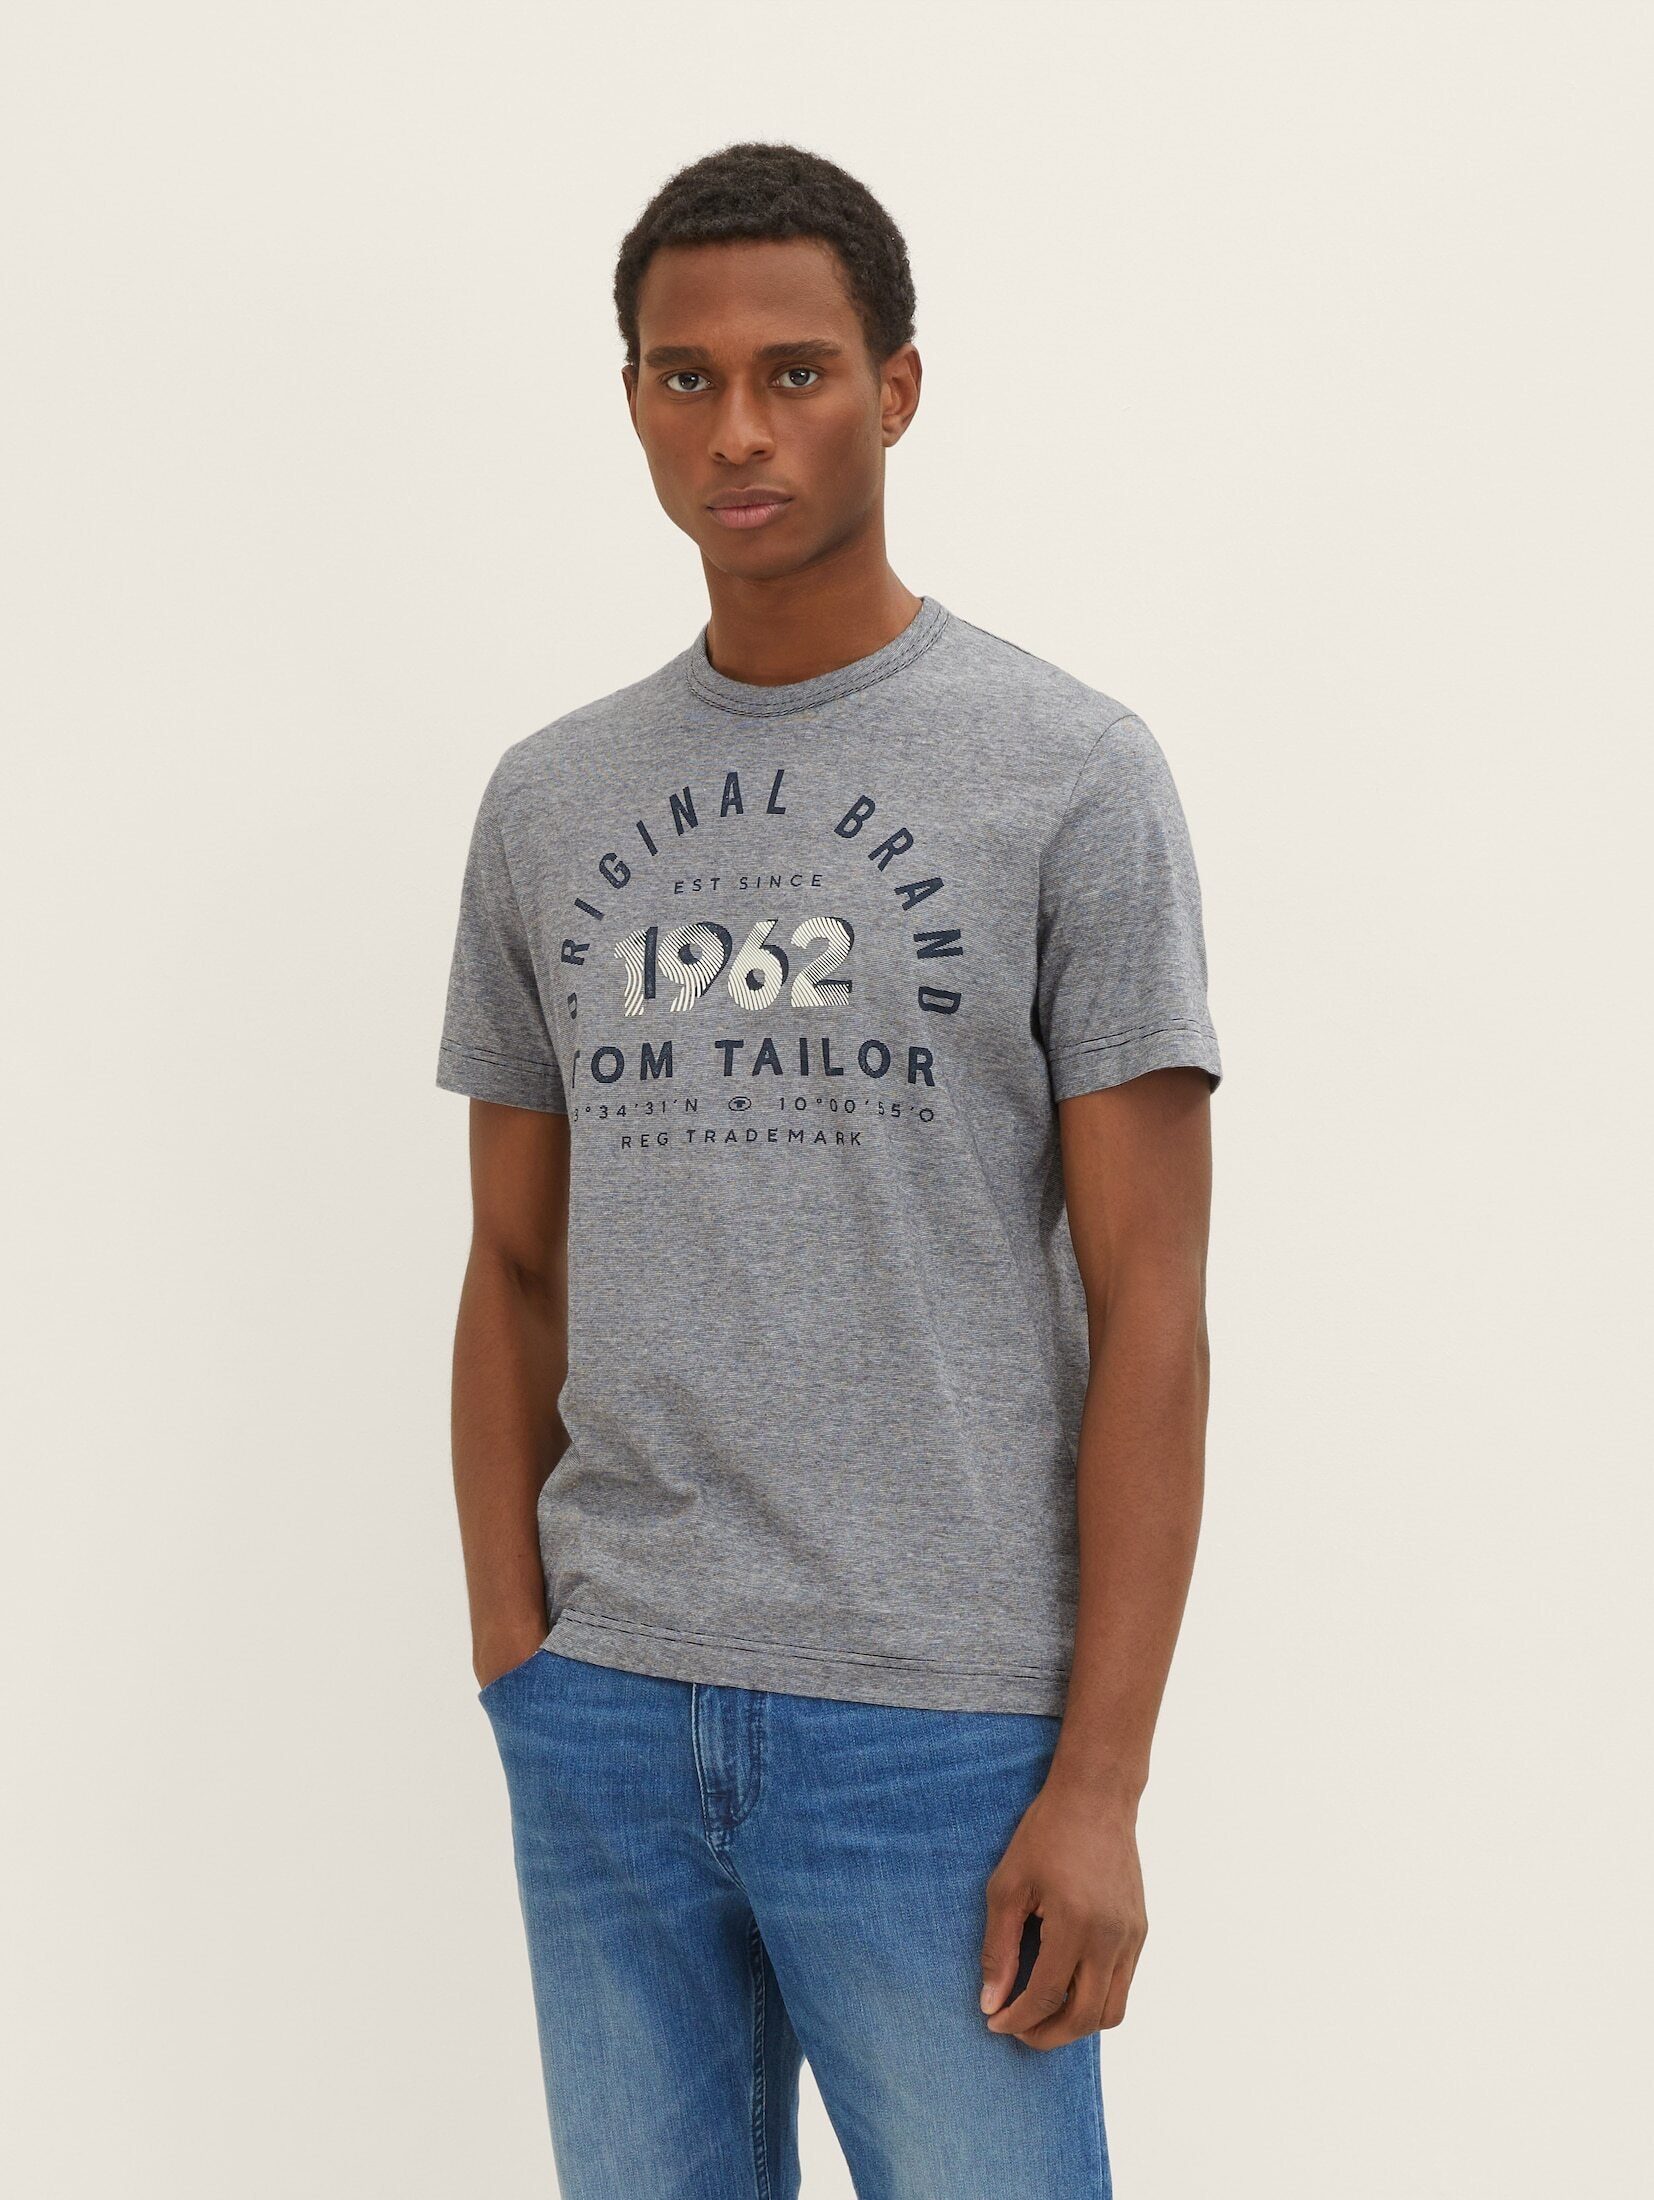 TOM TAILOR T-Shirt T-Shirt mit Print navy offwhite thin stripe